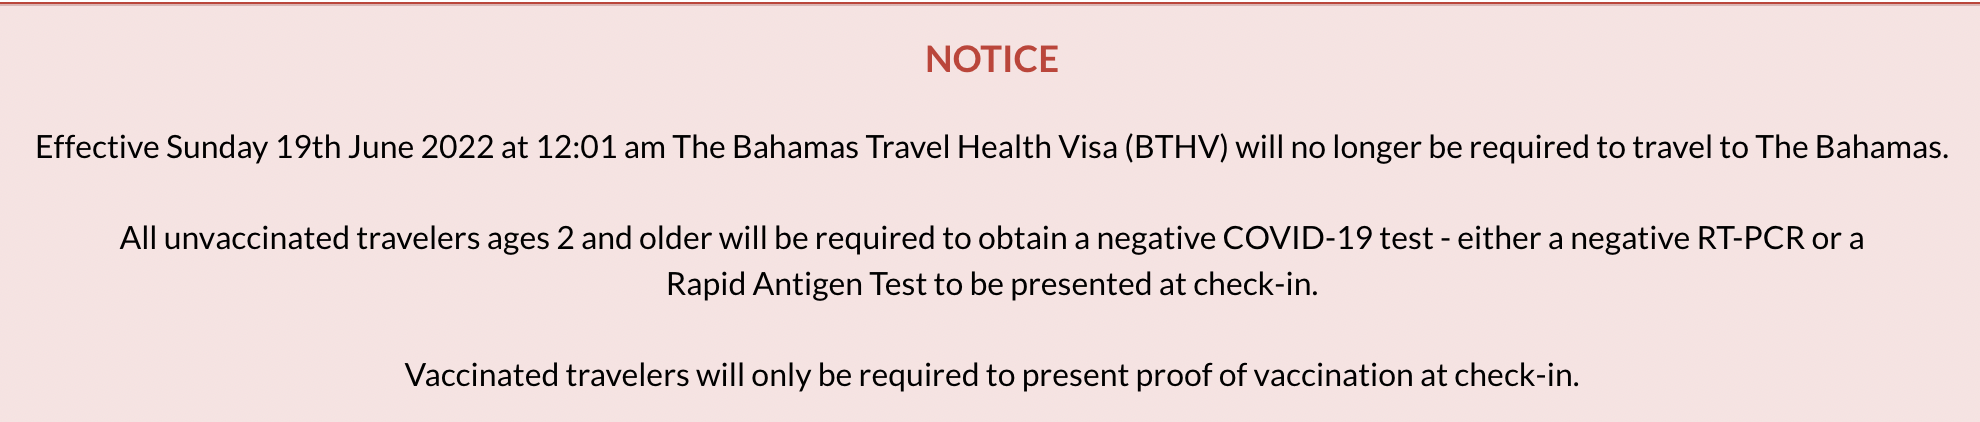 bahamas travel entry requirements